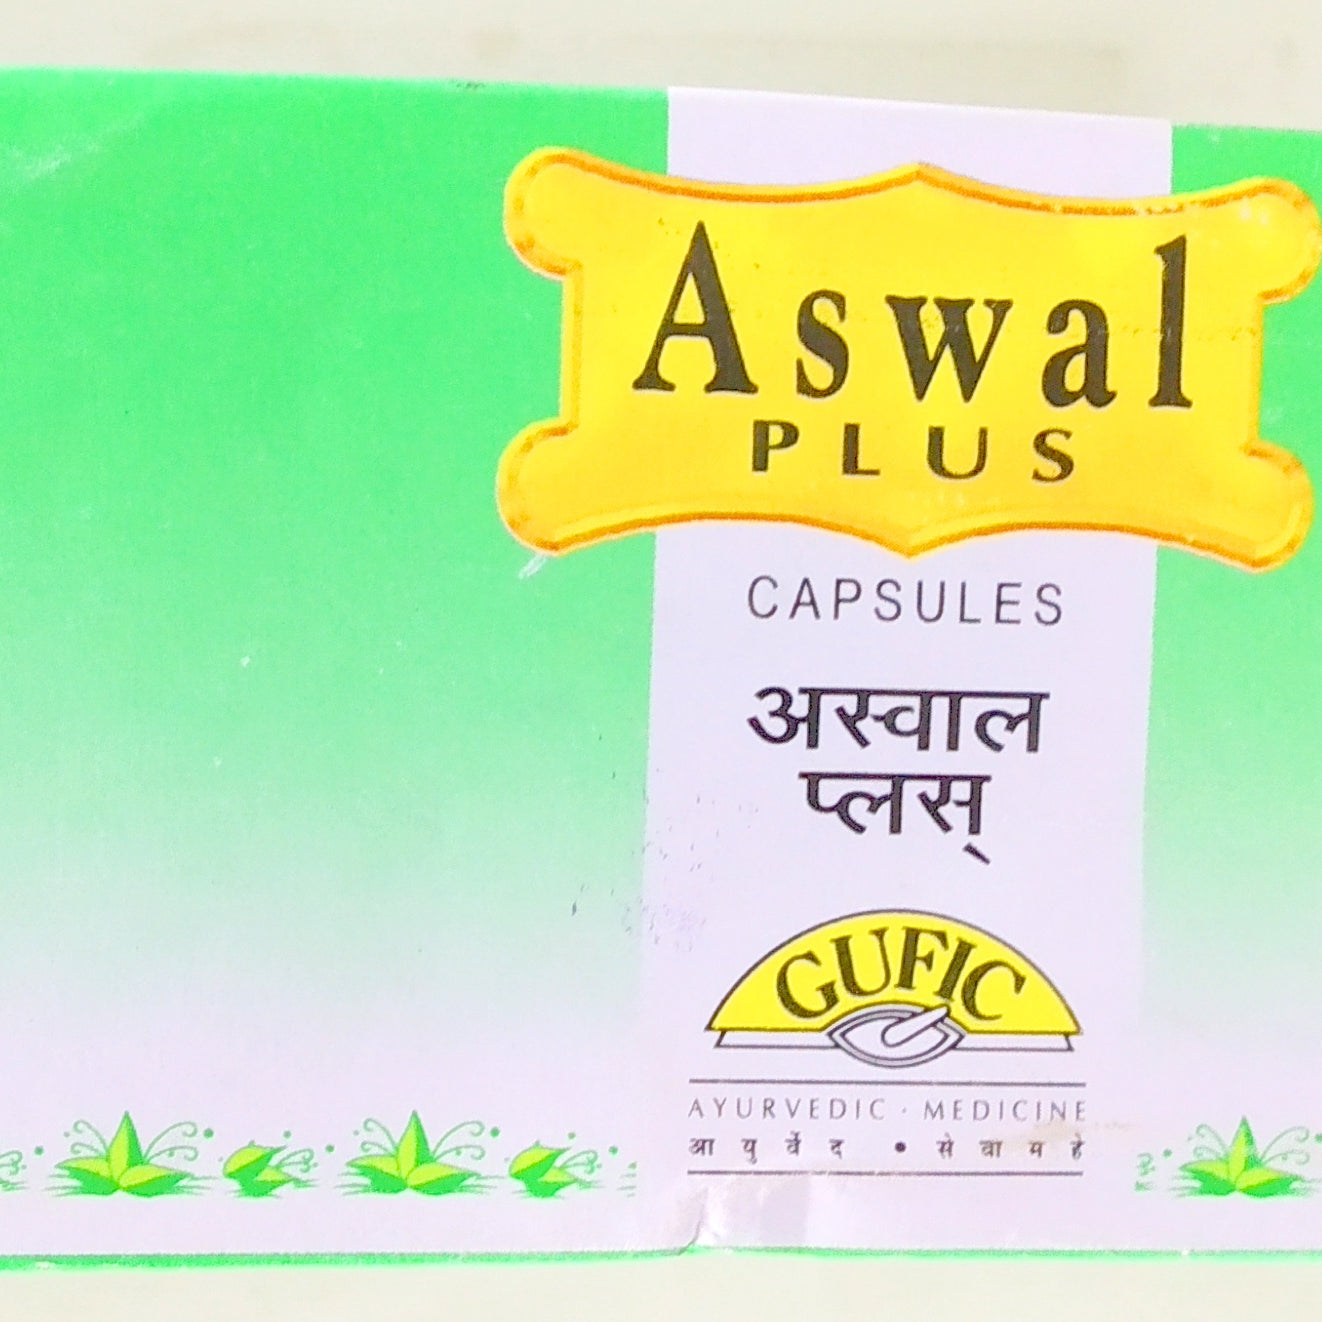 Shop Gufic Aswal Plus 10Capsules at price 126.00 from Gufic Online - Ayush Care